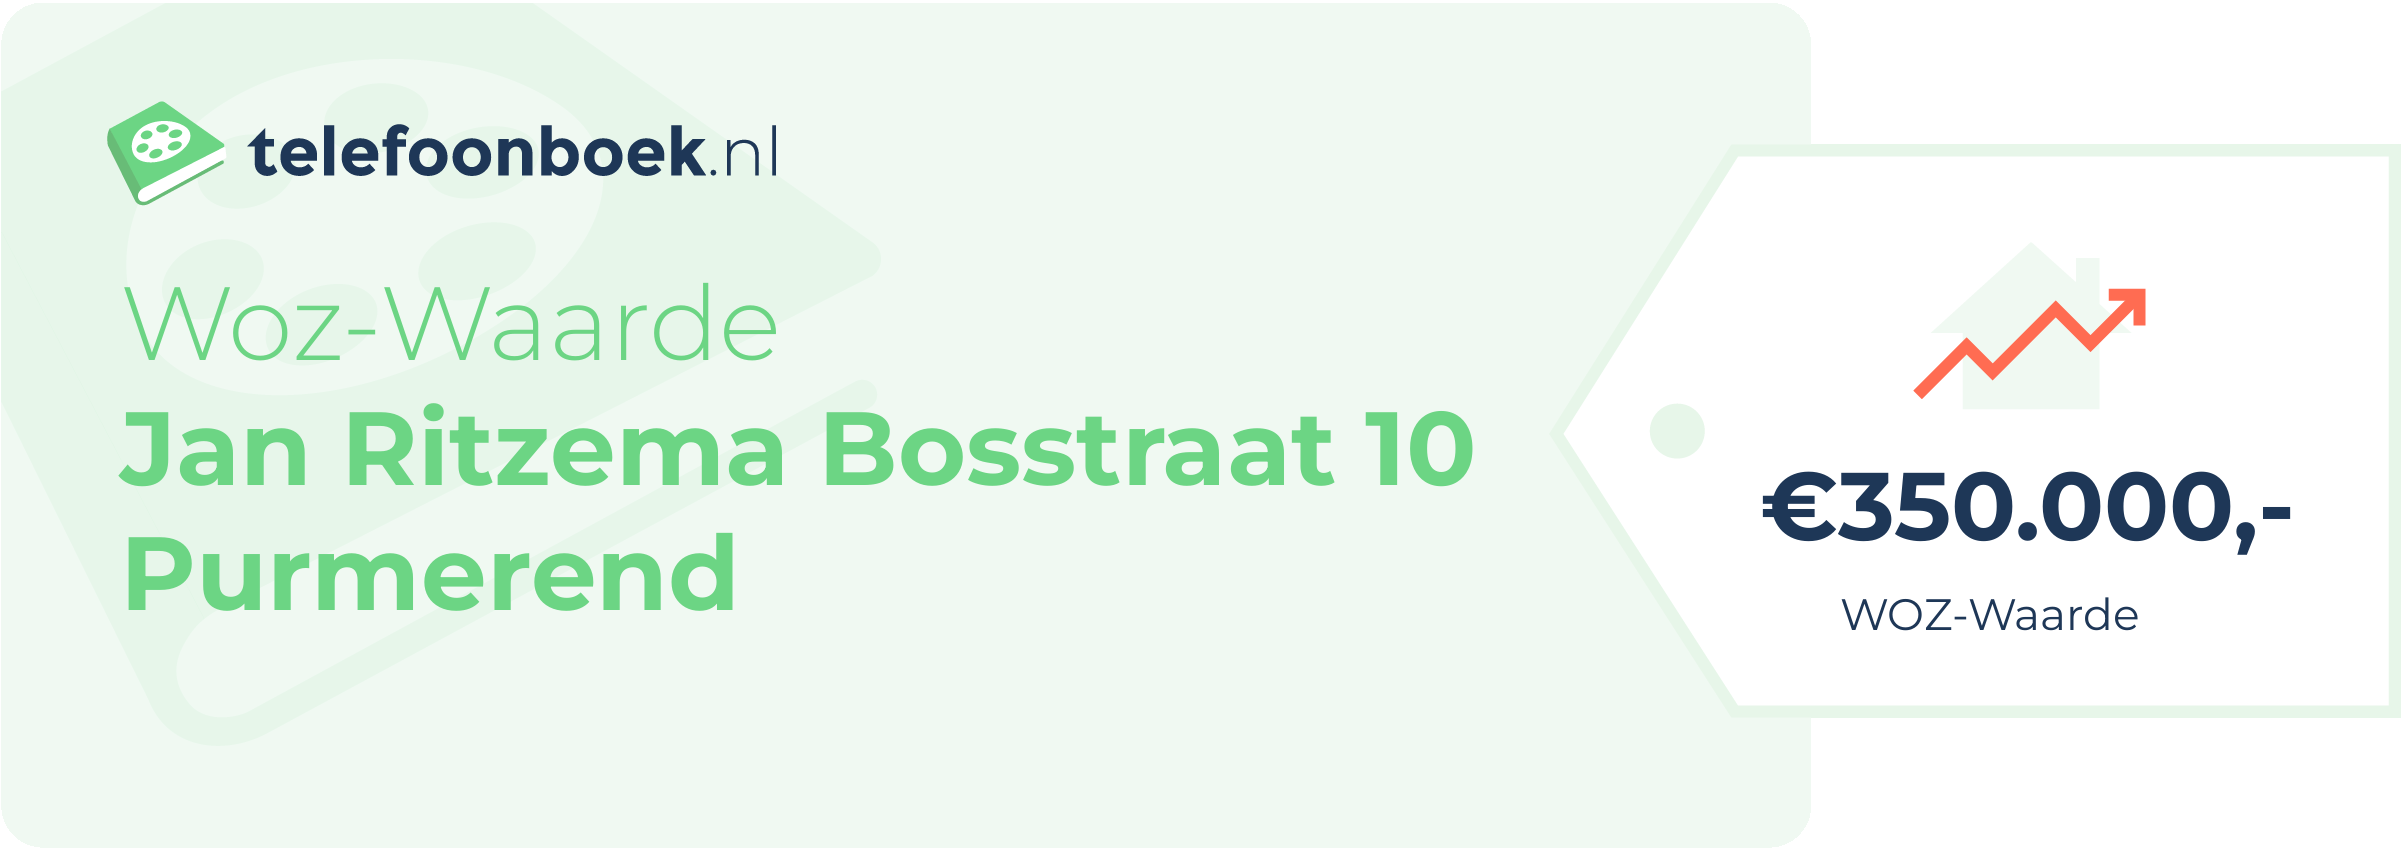 WOZ-waarde Jan Ritzema Bosstraat 10 Purmerend